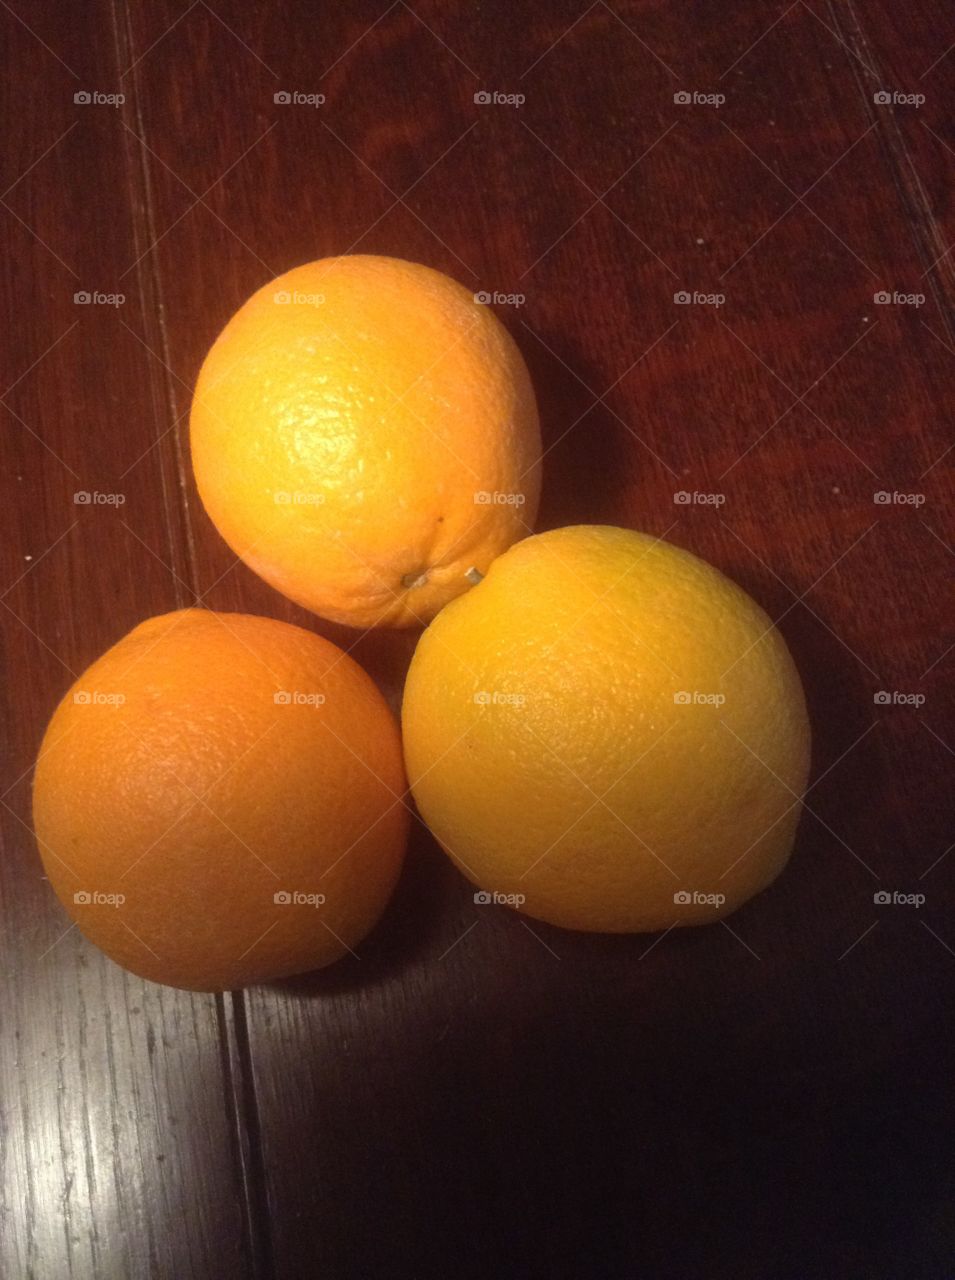 Oranges for you  oranges for me.